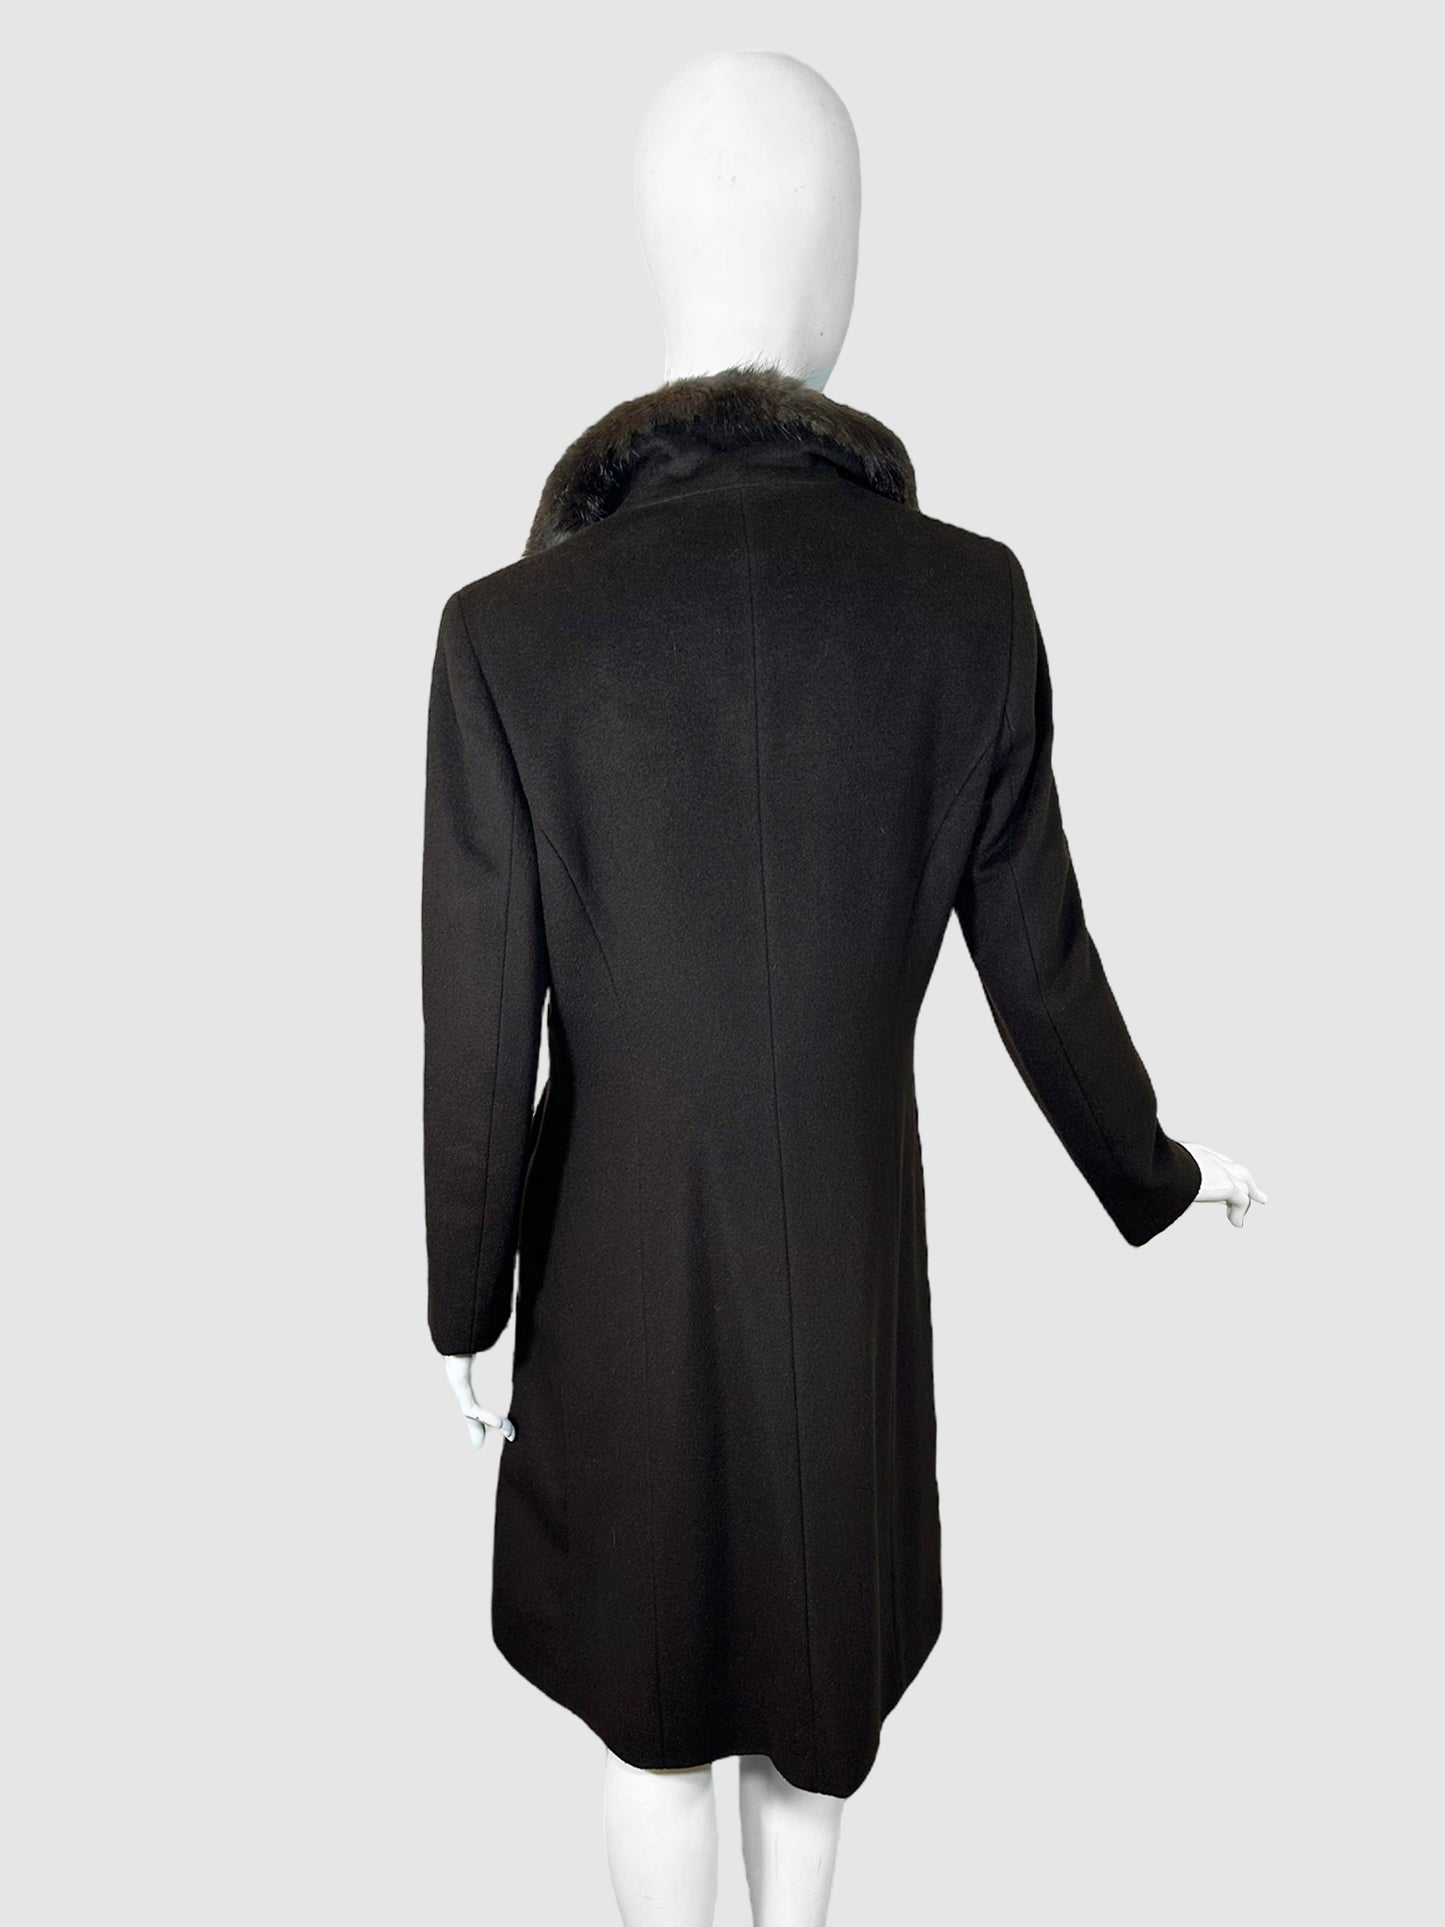 Cinzia Rocca Wool Coat with Fur Trim - Size 8